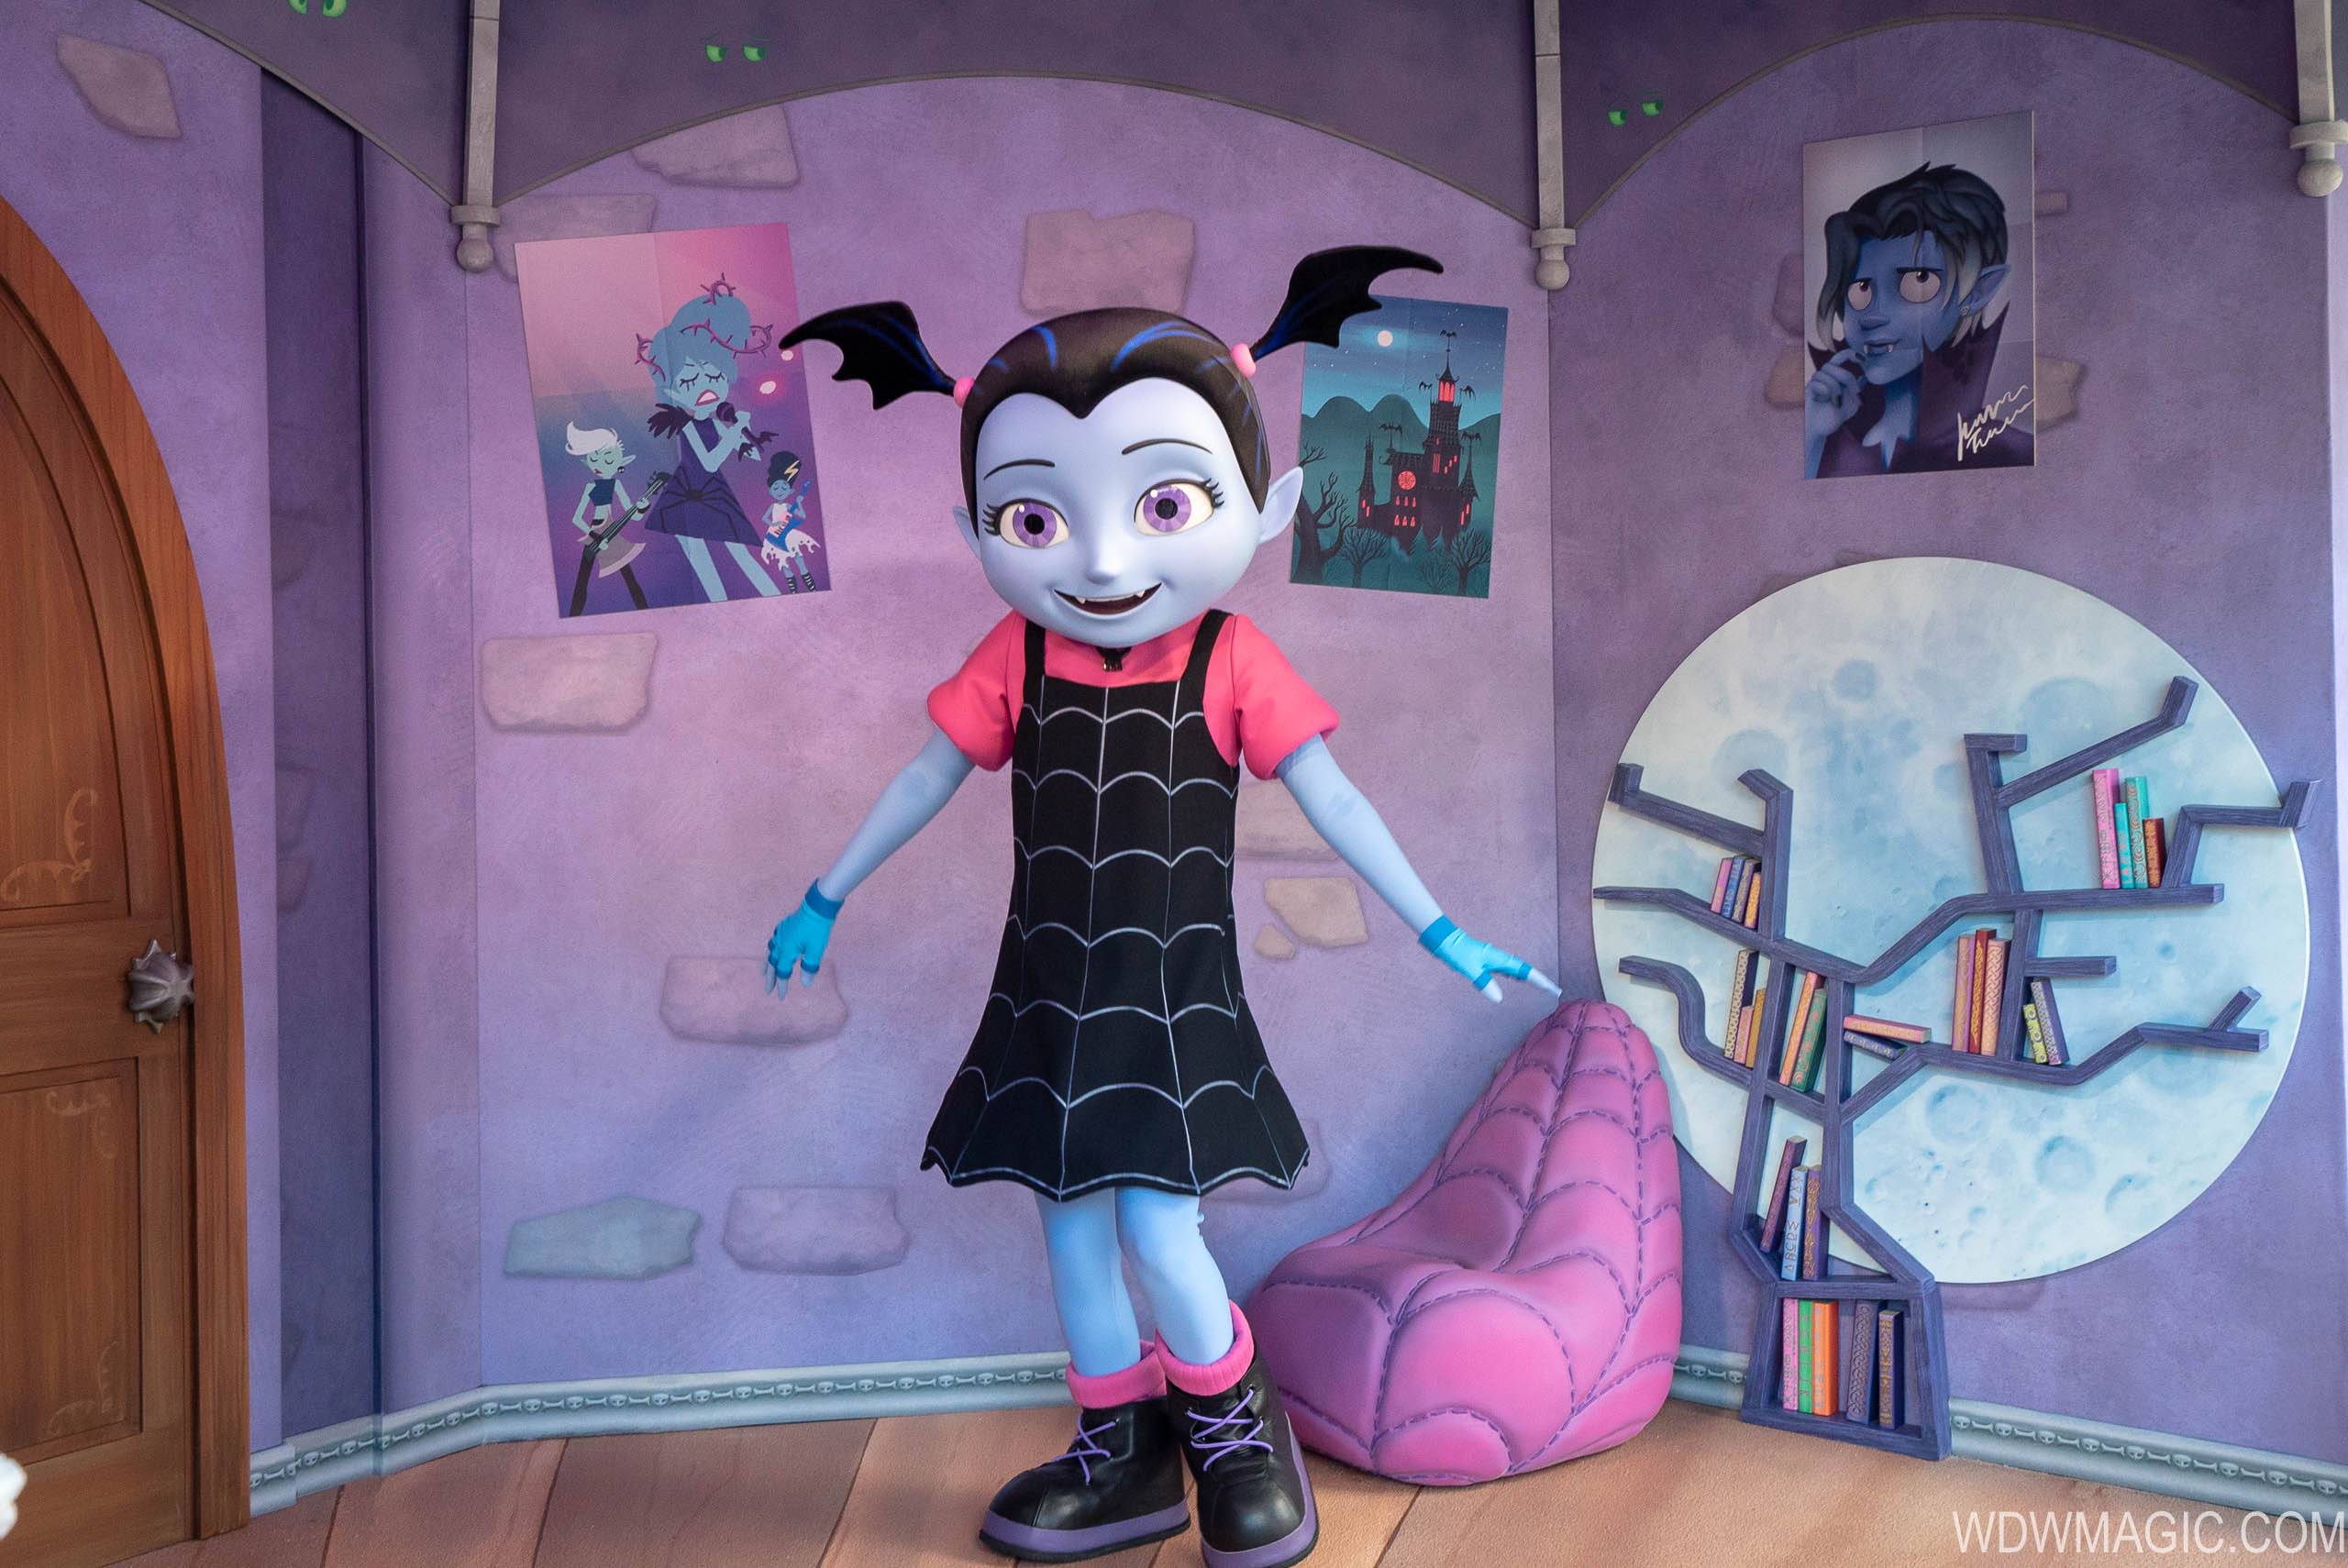 Vampirina meet and greet at Disney's Hollywood Studios